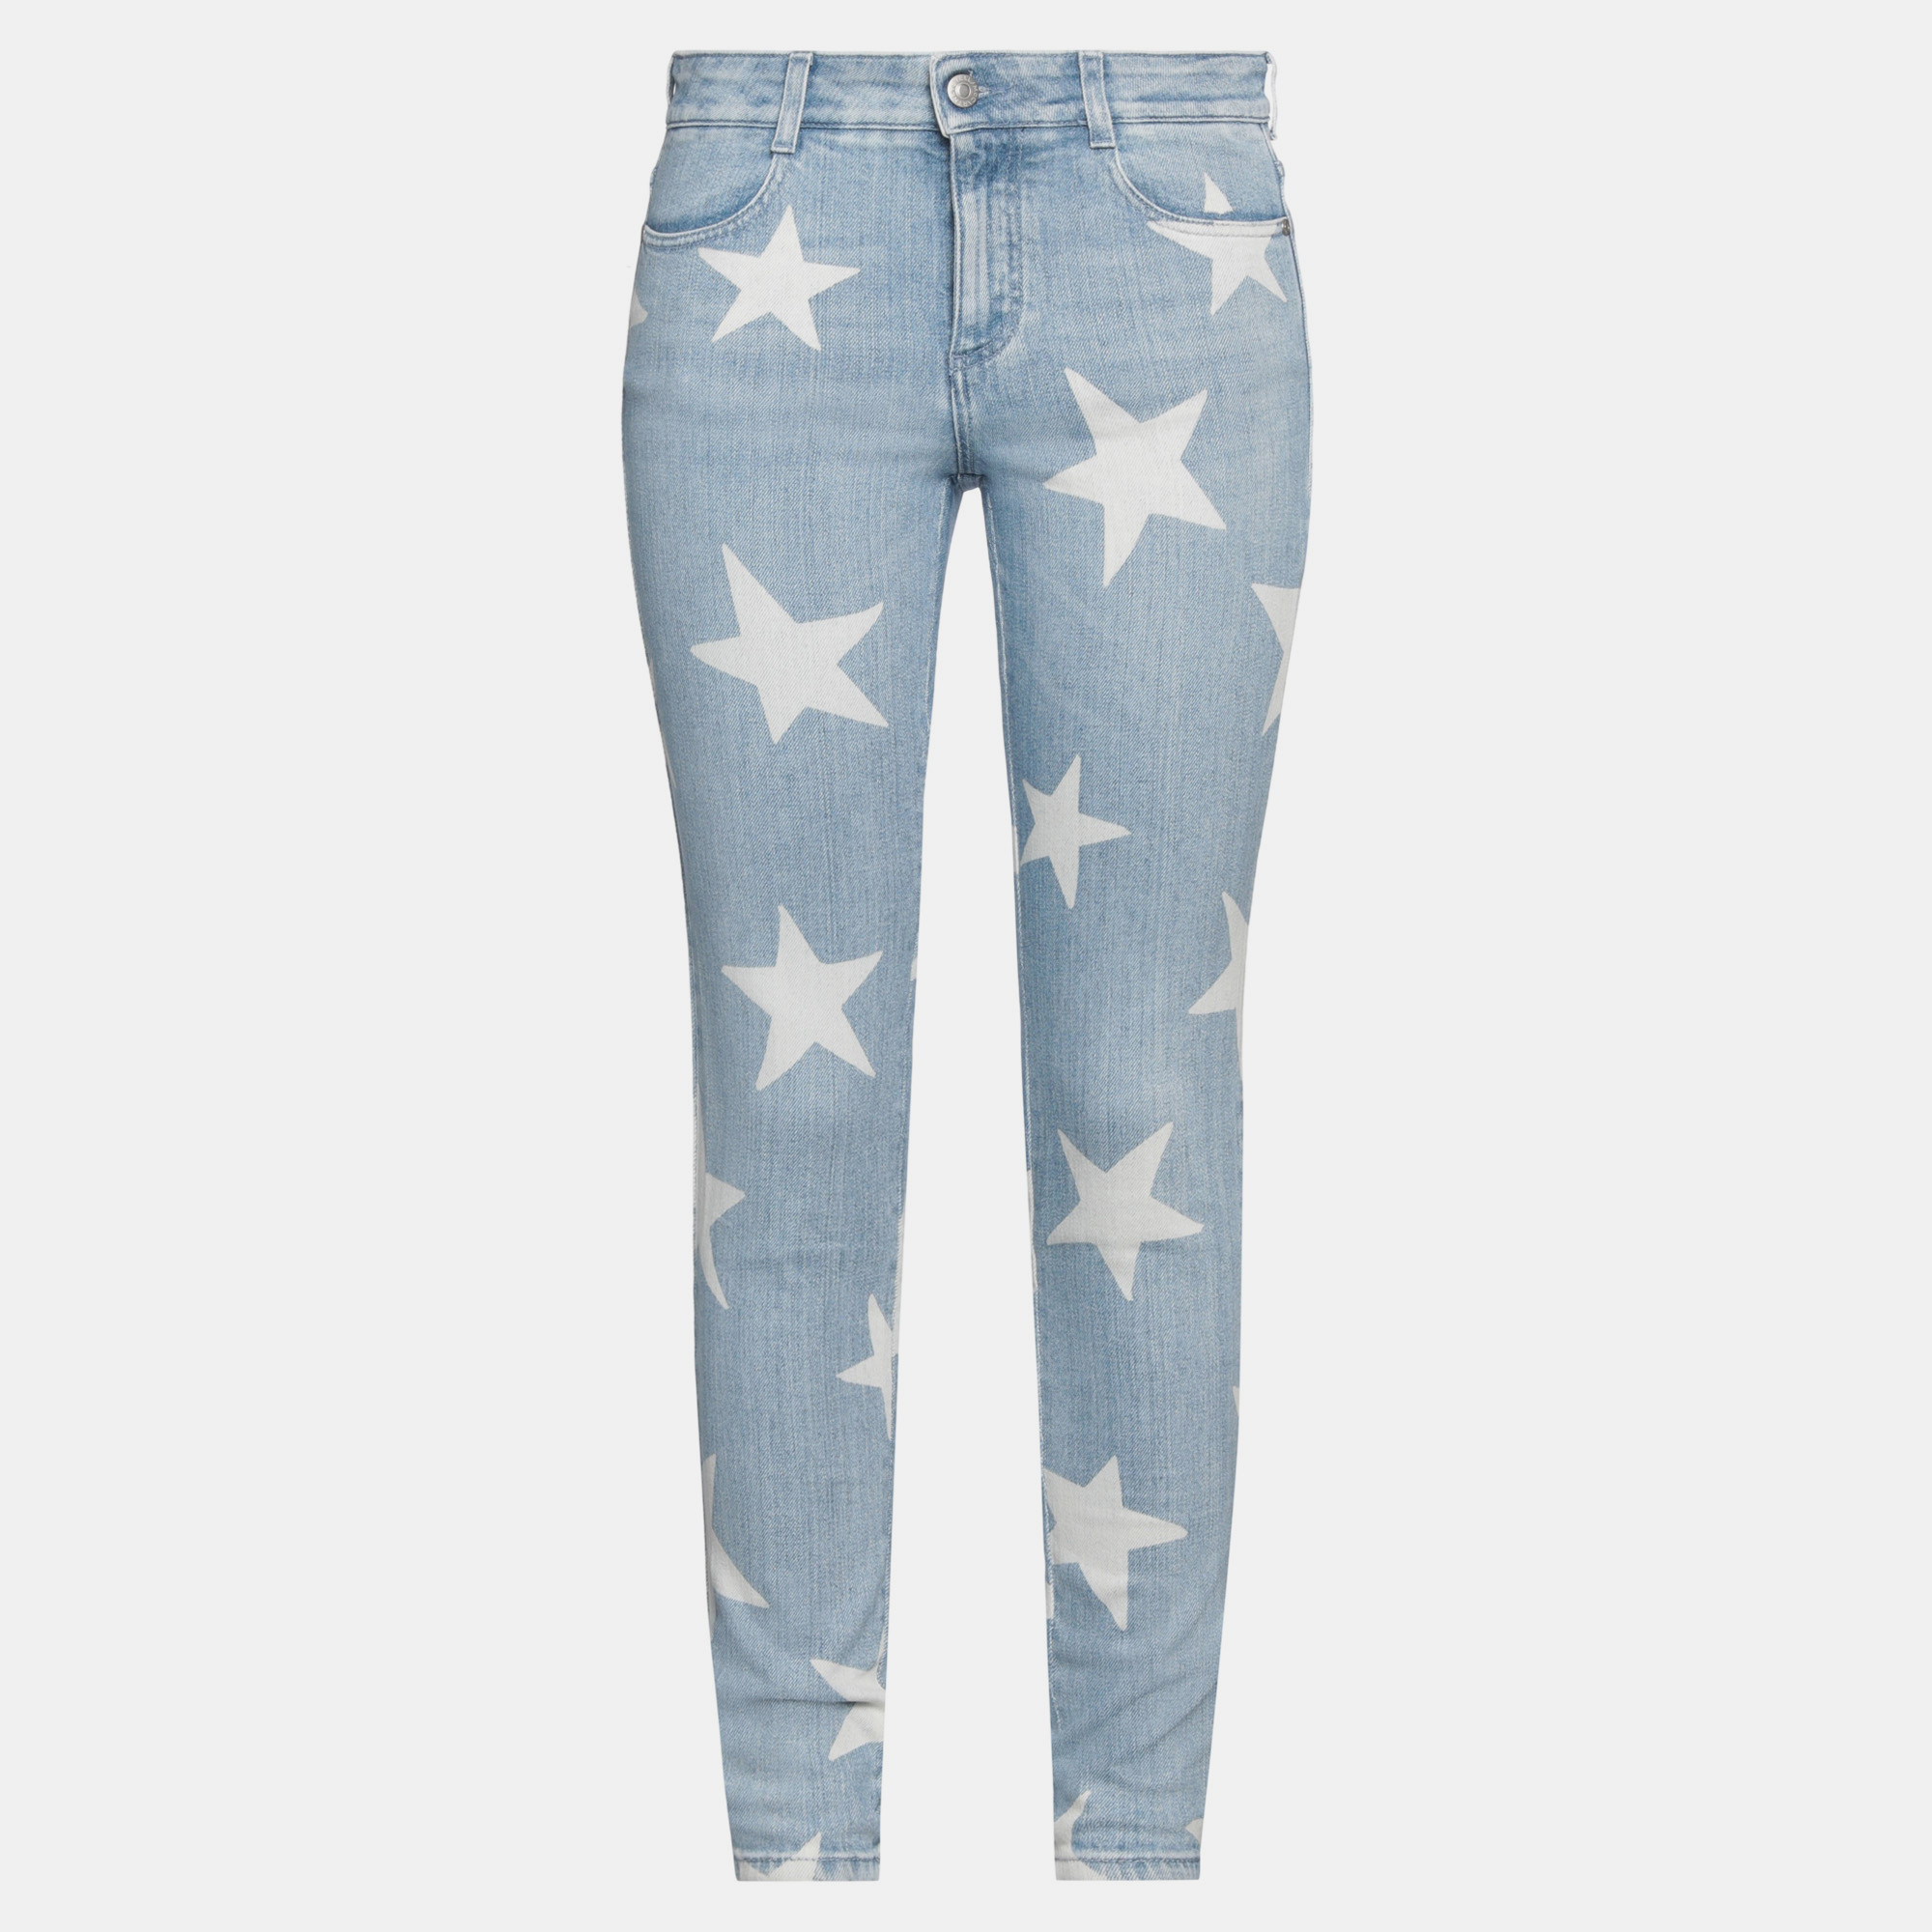 Stella mccartney cotton jeans 25